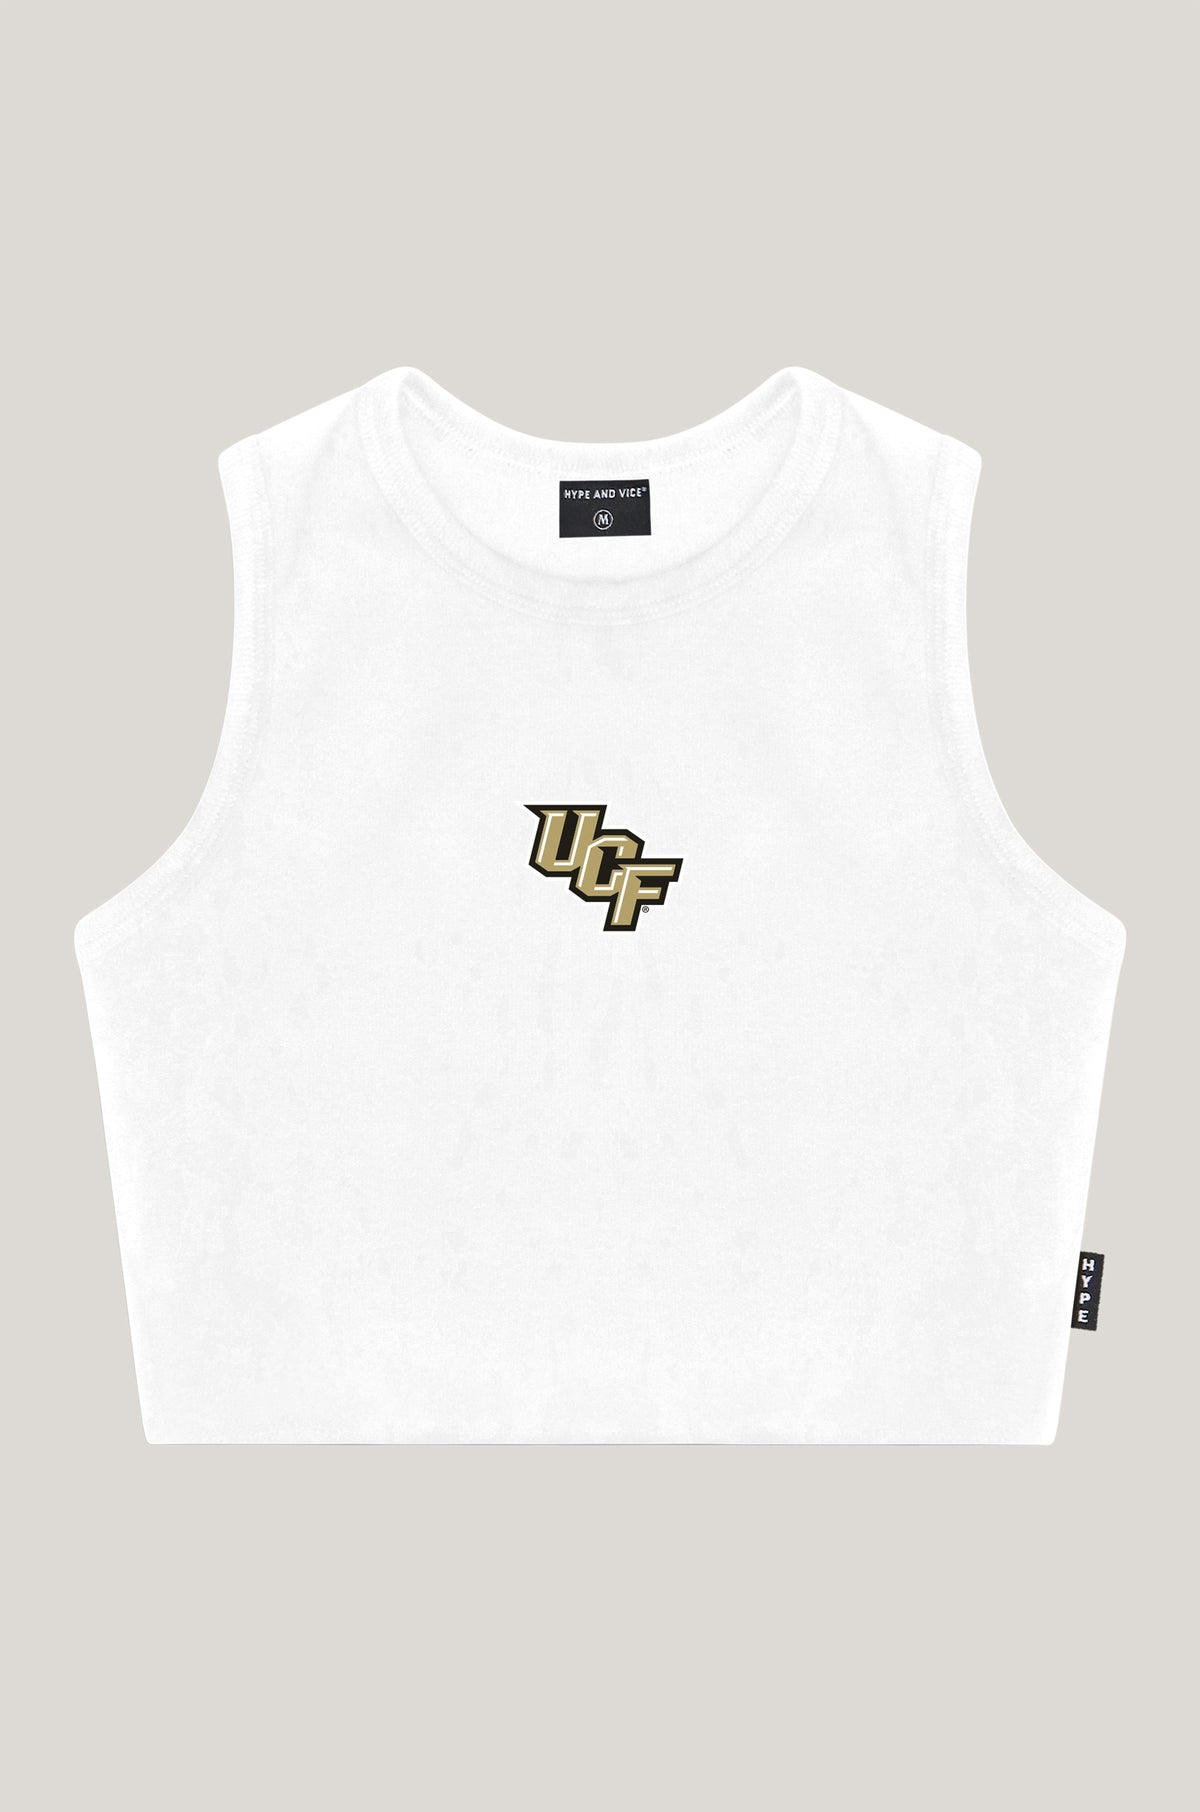 UCF Knights Women's Gold Glitter Tank Top / Shirt - Black